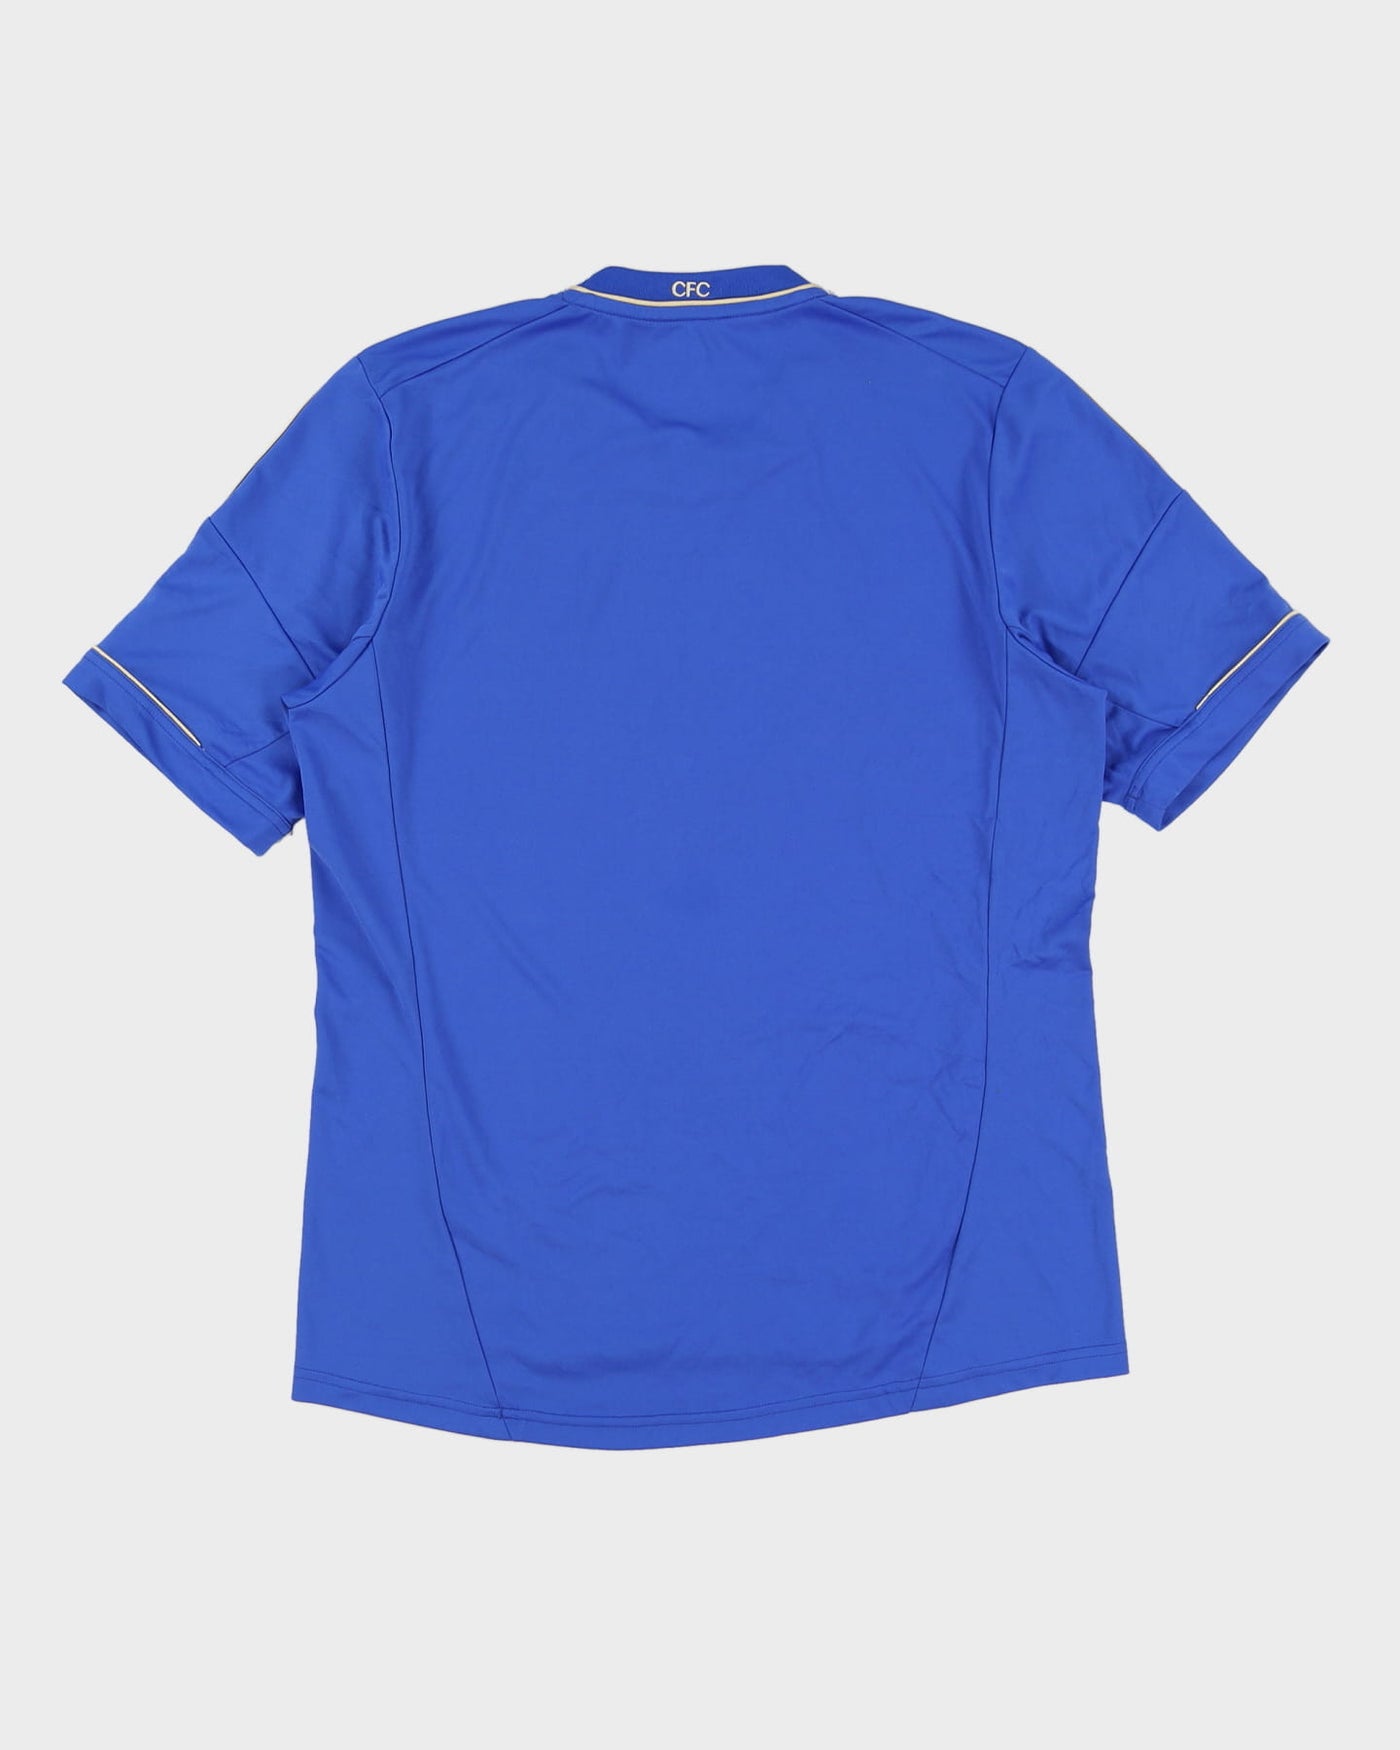 Chelsea 2012-13 Adidas Blue Home Kit / Football Shirt / Jersey - L